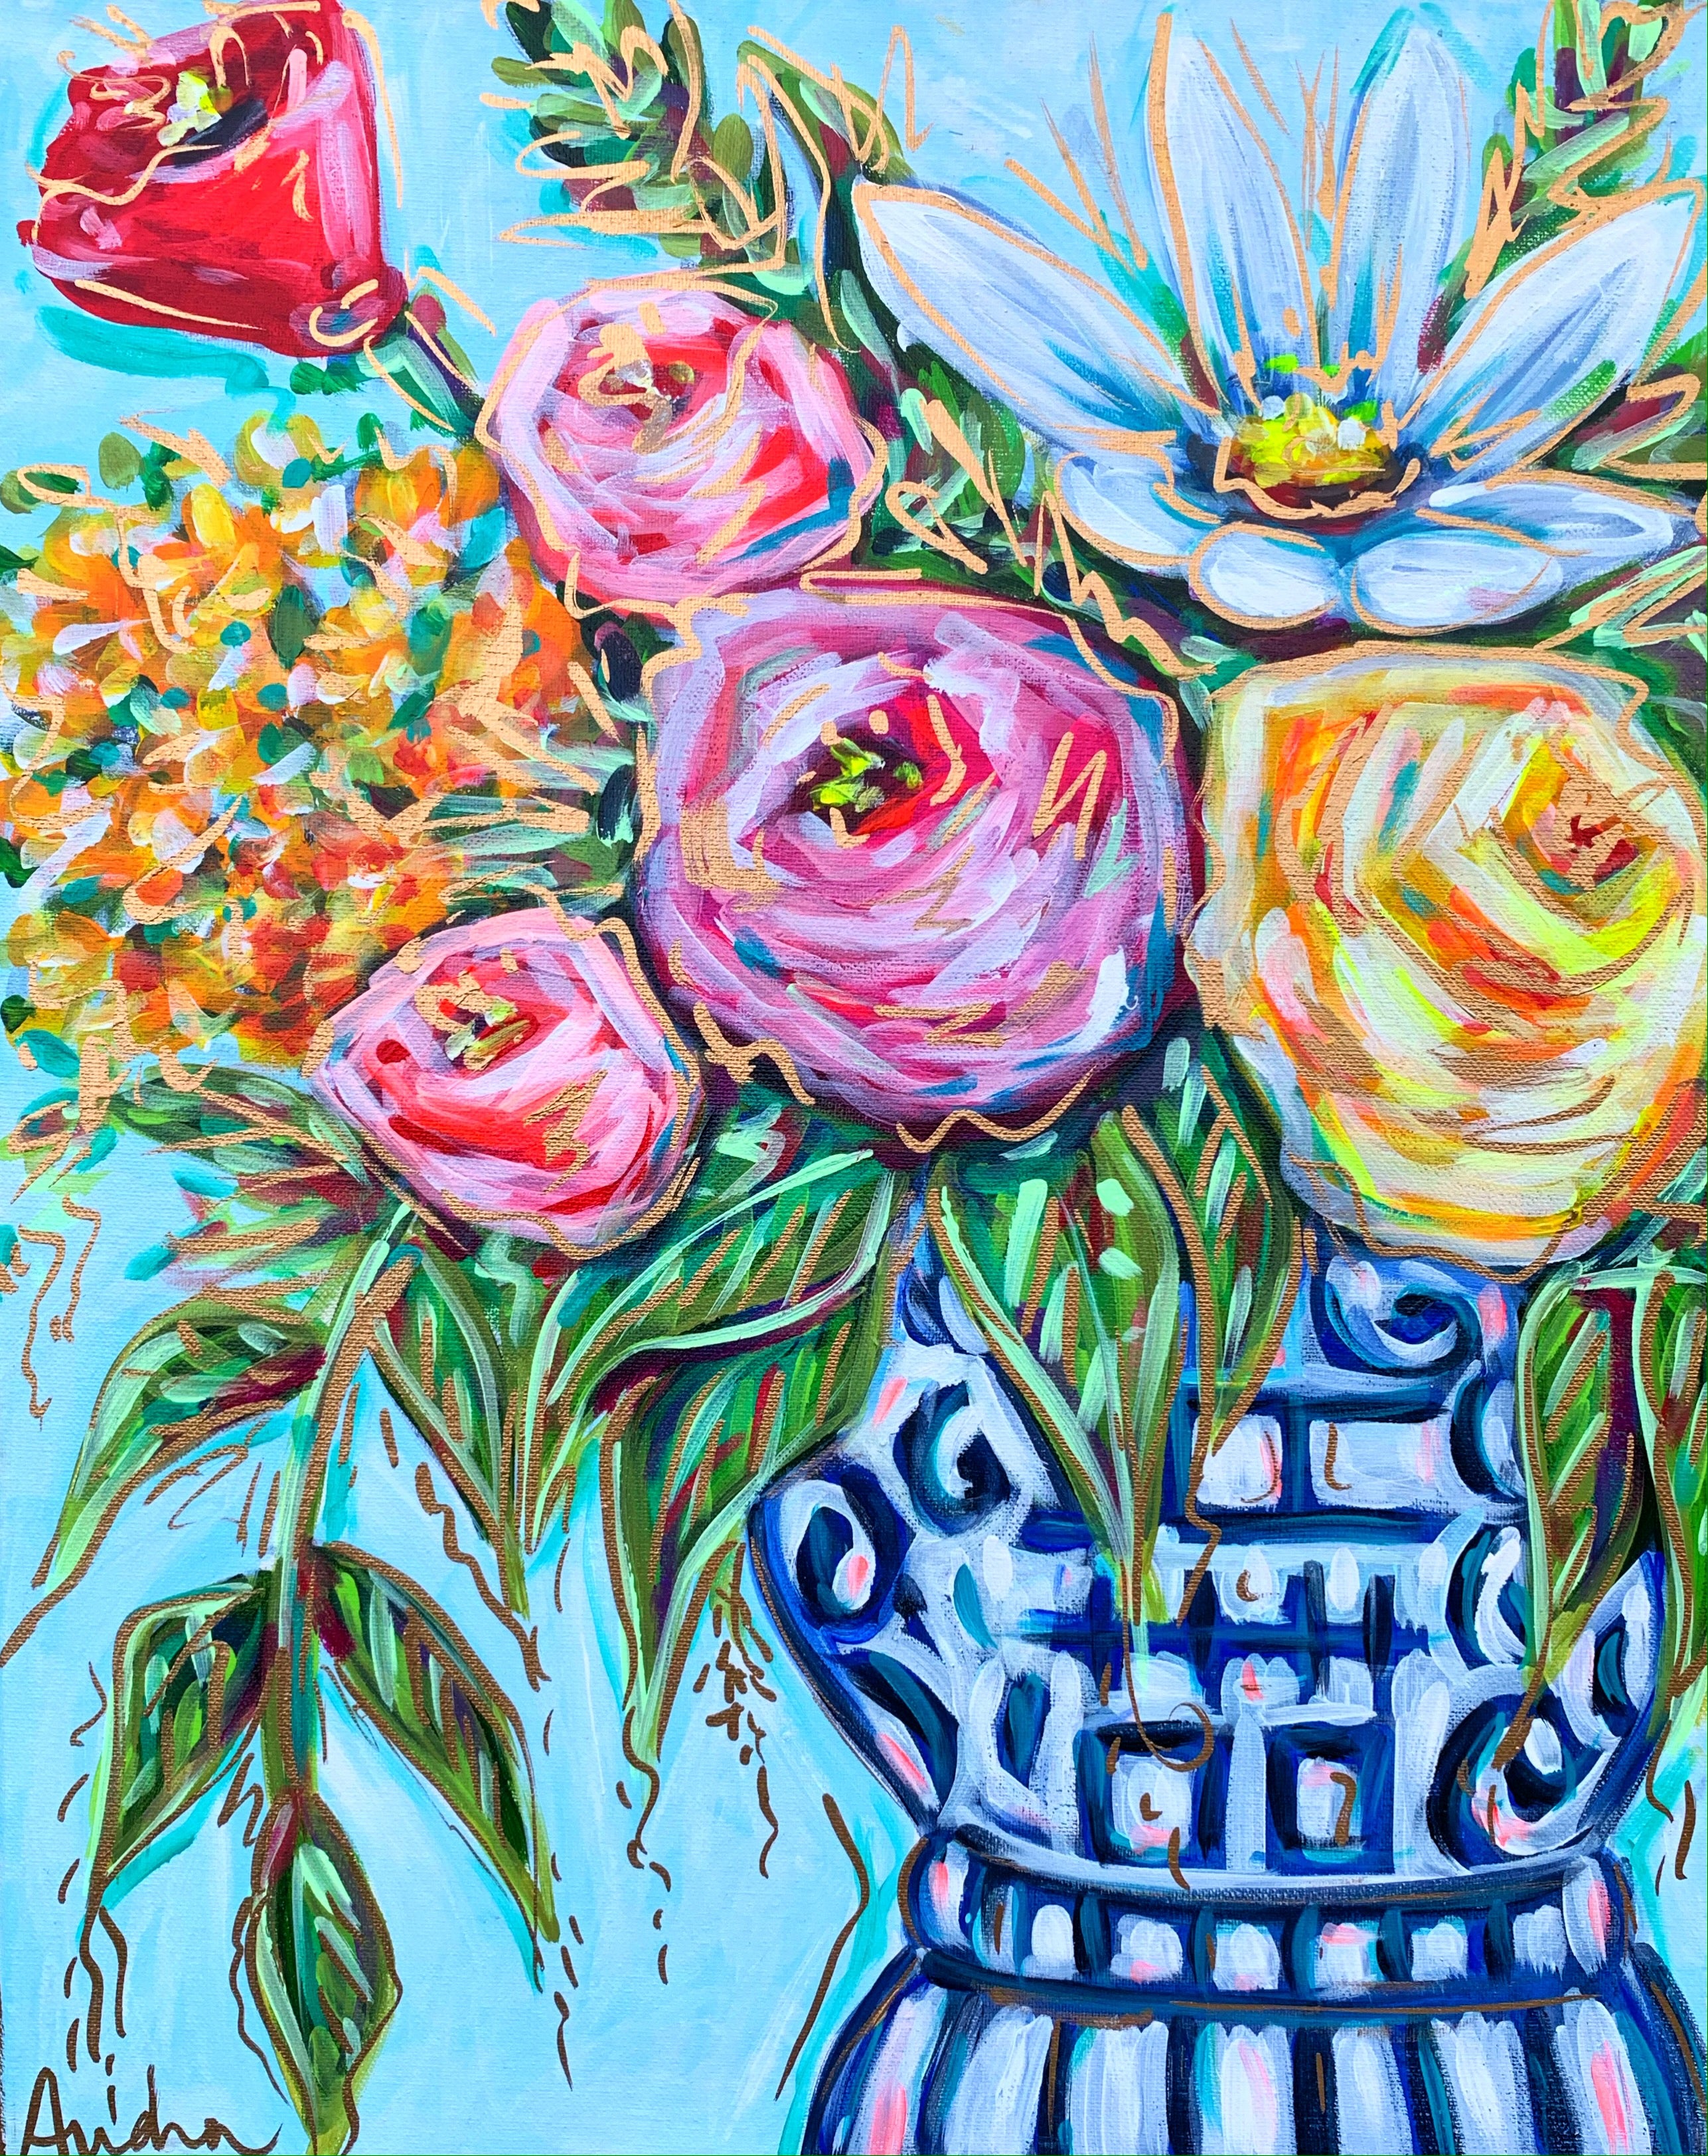 Ginger Jars Art Prints, Watercolor Flowers, Floral Art, Bedroom